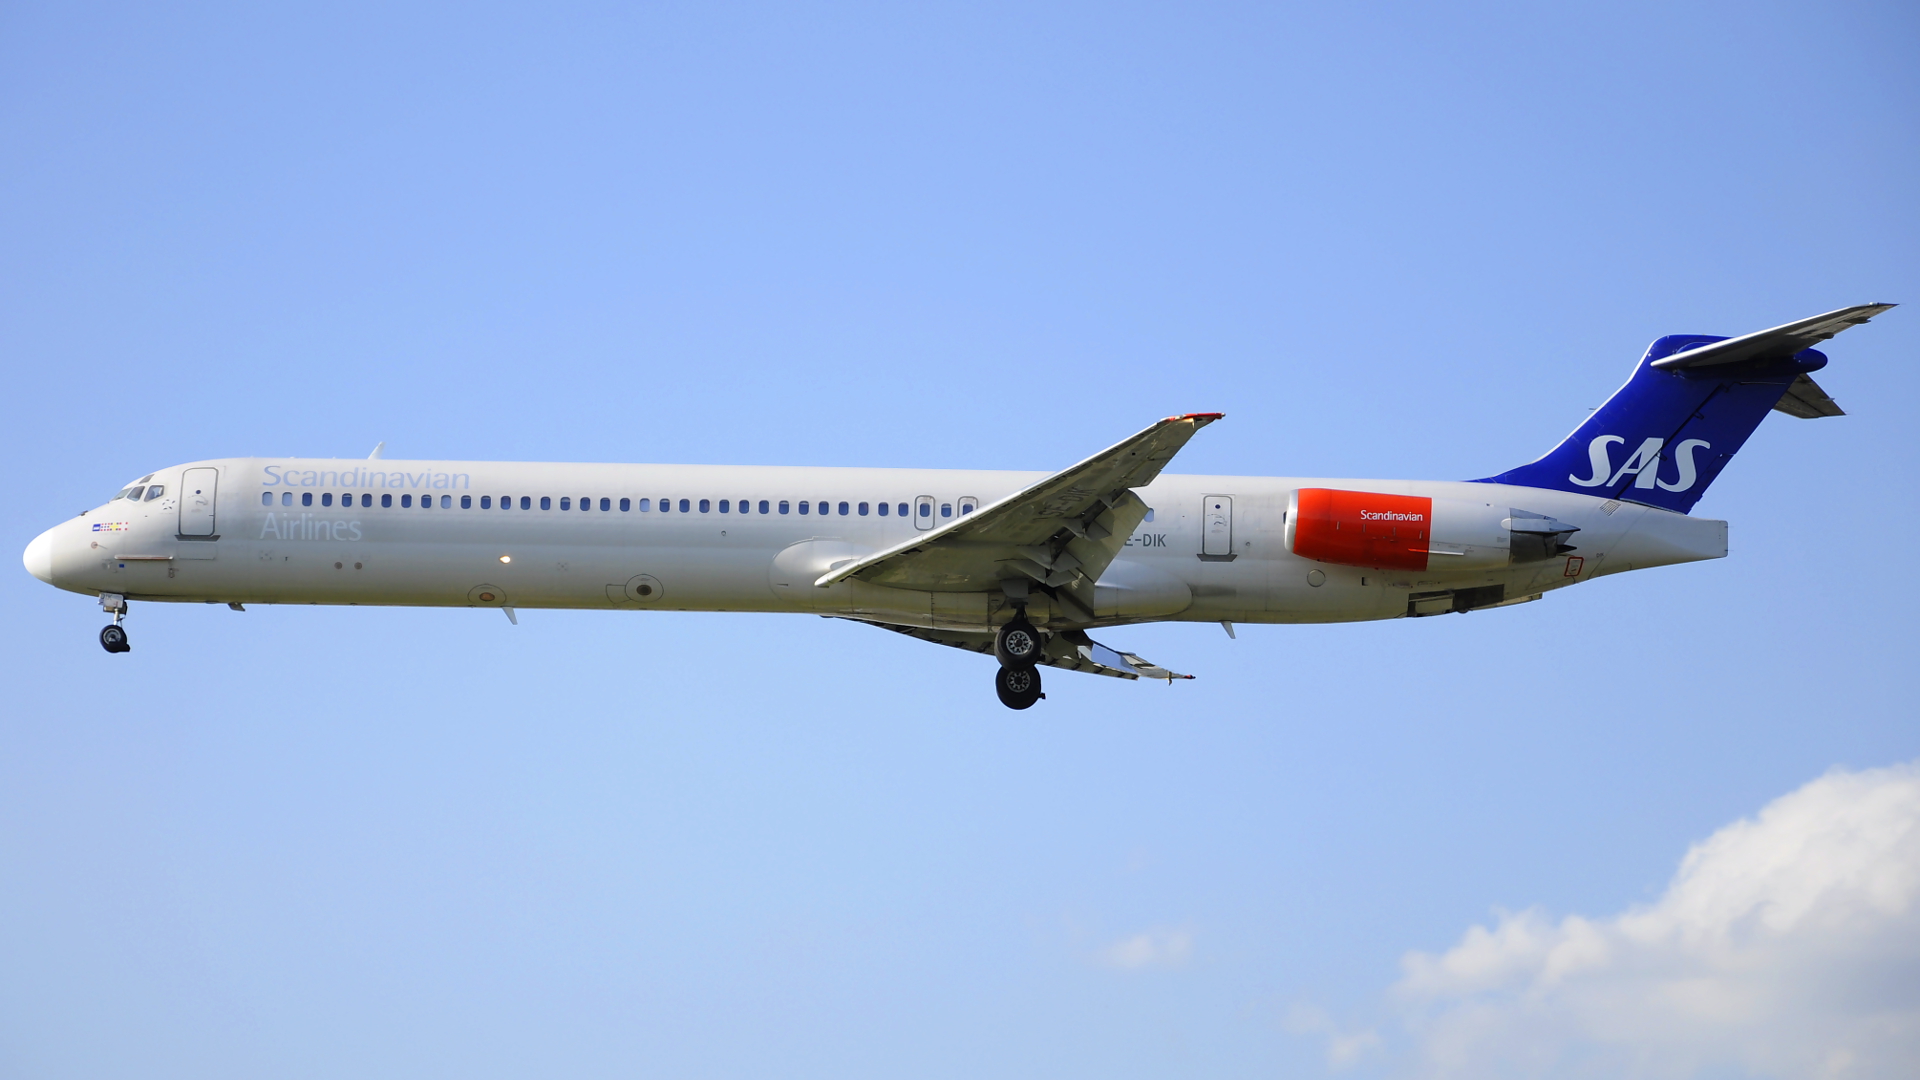 SE-DIK ✈ Scandinavian Airlines McDonnell Douglas MD-82 @ London-Heathrow